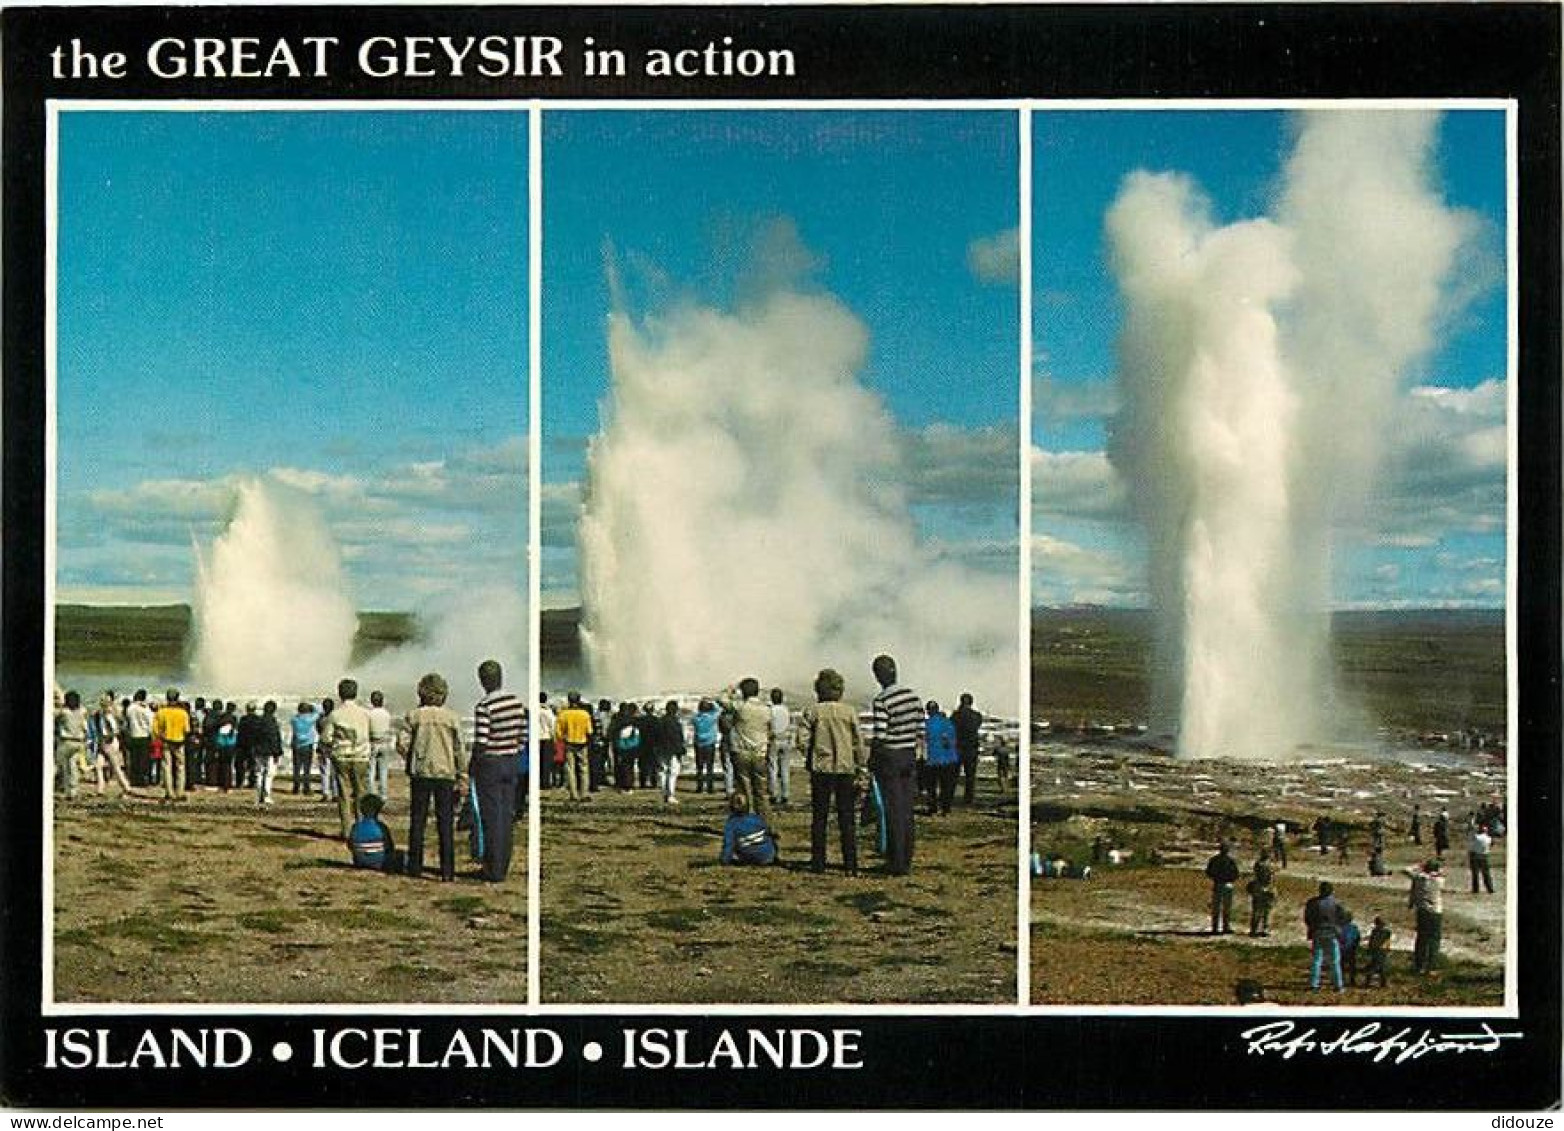 Islande - The Great Geysir In Action, Sprouting Hof Water Der And Steam 50-60 M High - Geysers - Carte Neuve - Iceland - - Iceland